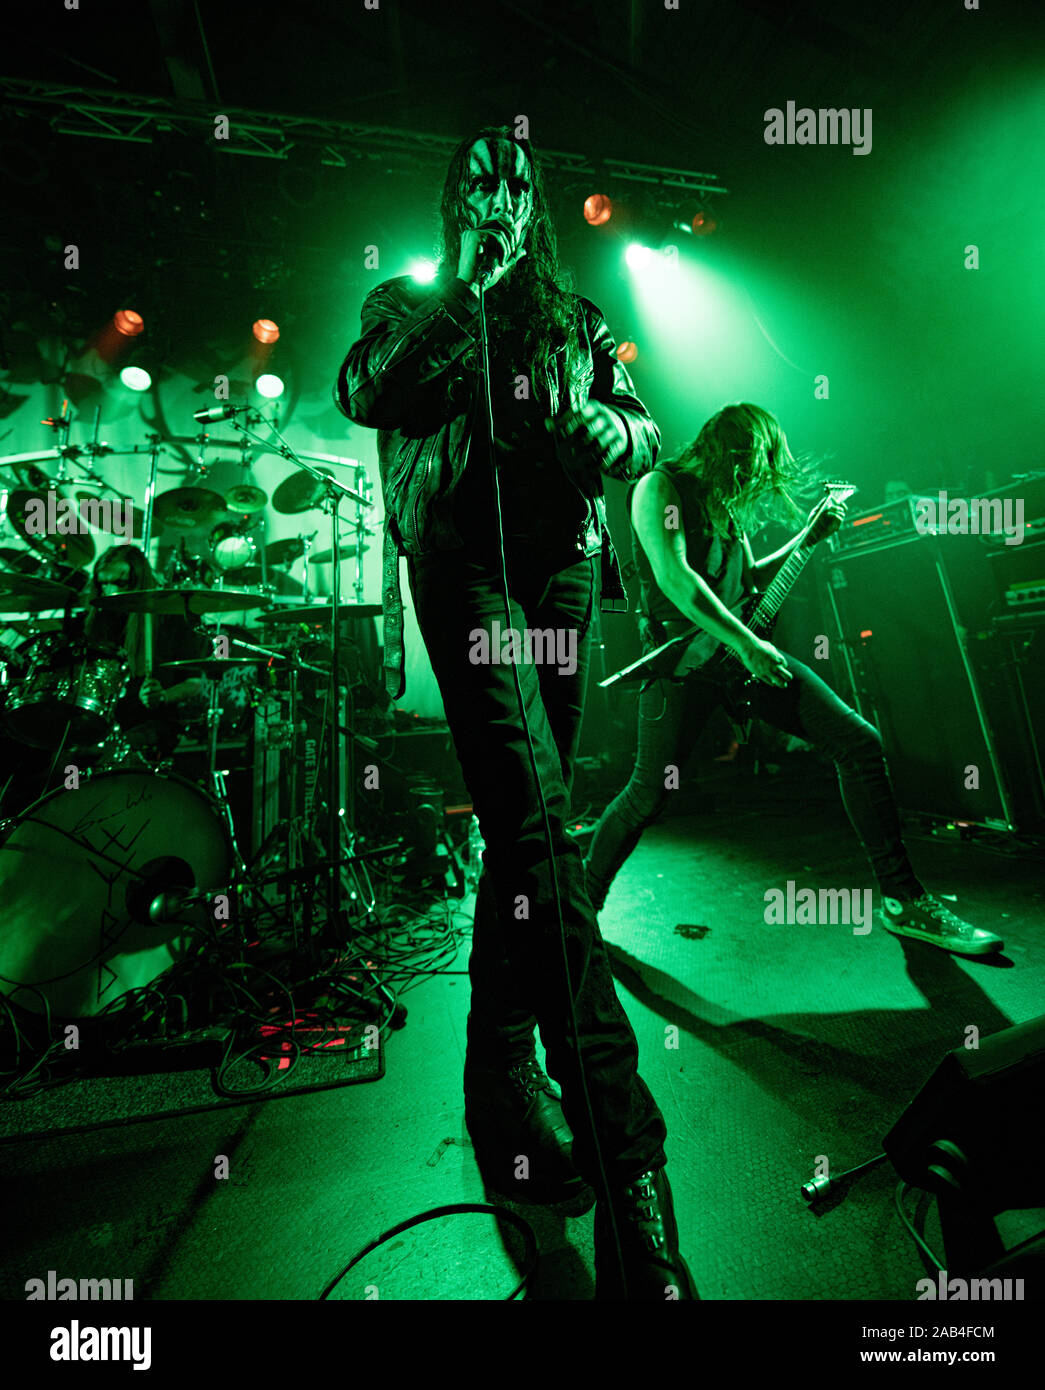 Copenhagen, Denmark. 24th, November 2019. The Norwegian black metal band Gaahls Wyrd performs a live concert at Pumpehuset in Copenhagen. Here vocalist Gaahl is seen live on stage. (Photo credit: Gonzales Photo - Nikolaj Bransholm). Stock Photo